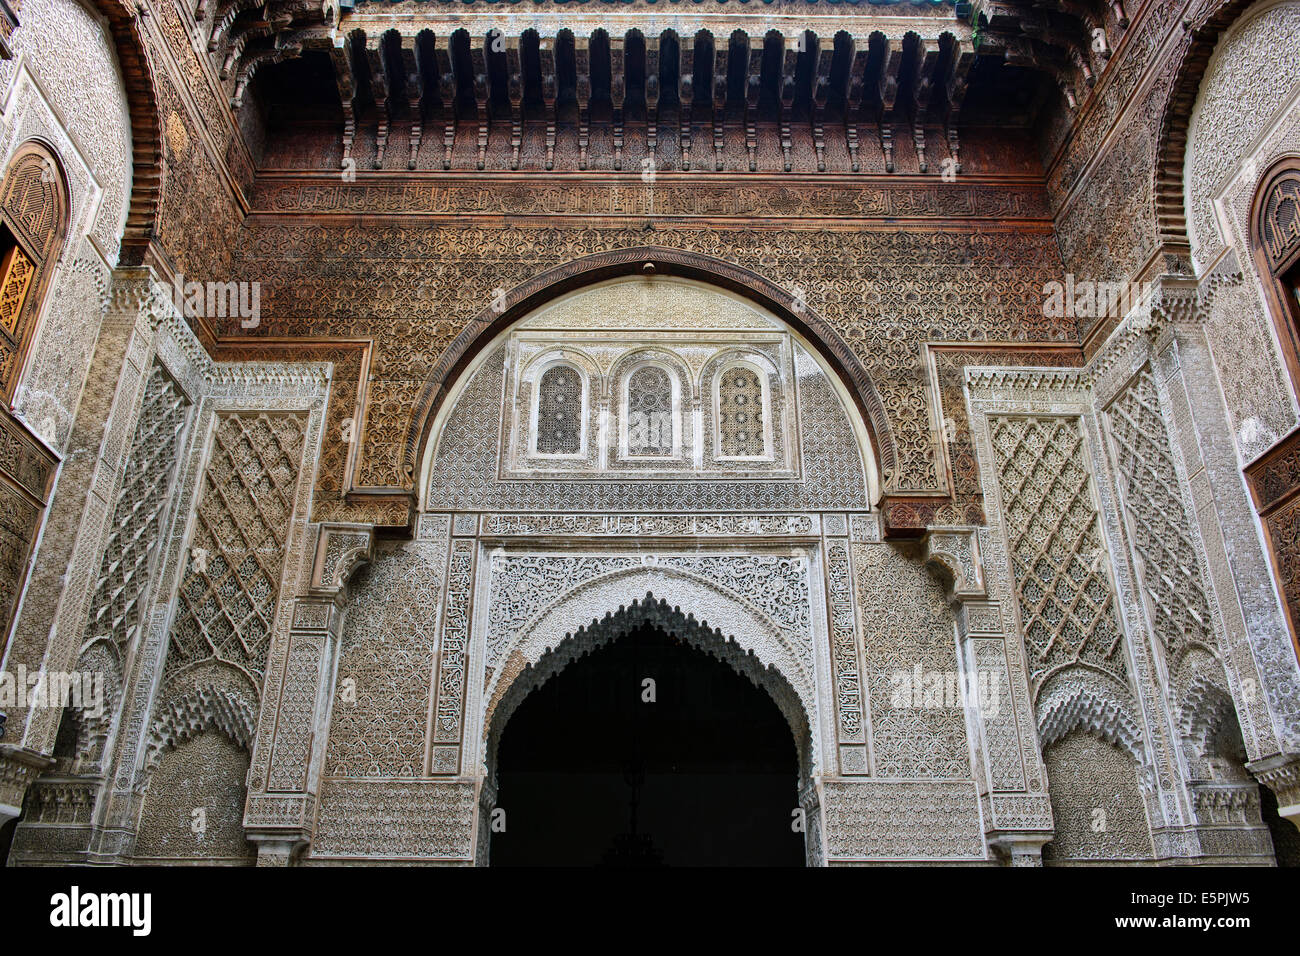 Madersa,Madrasa,Seat of Learning,School,Carved stucco panels,fountain courtyard,Cedar wood doors,Madrasa Seffarine,Fez,Morocco Stock Photo